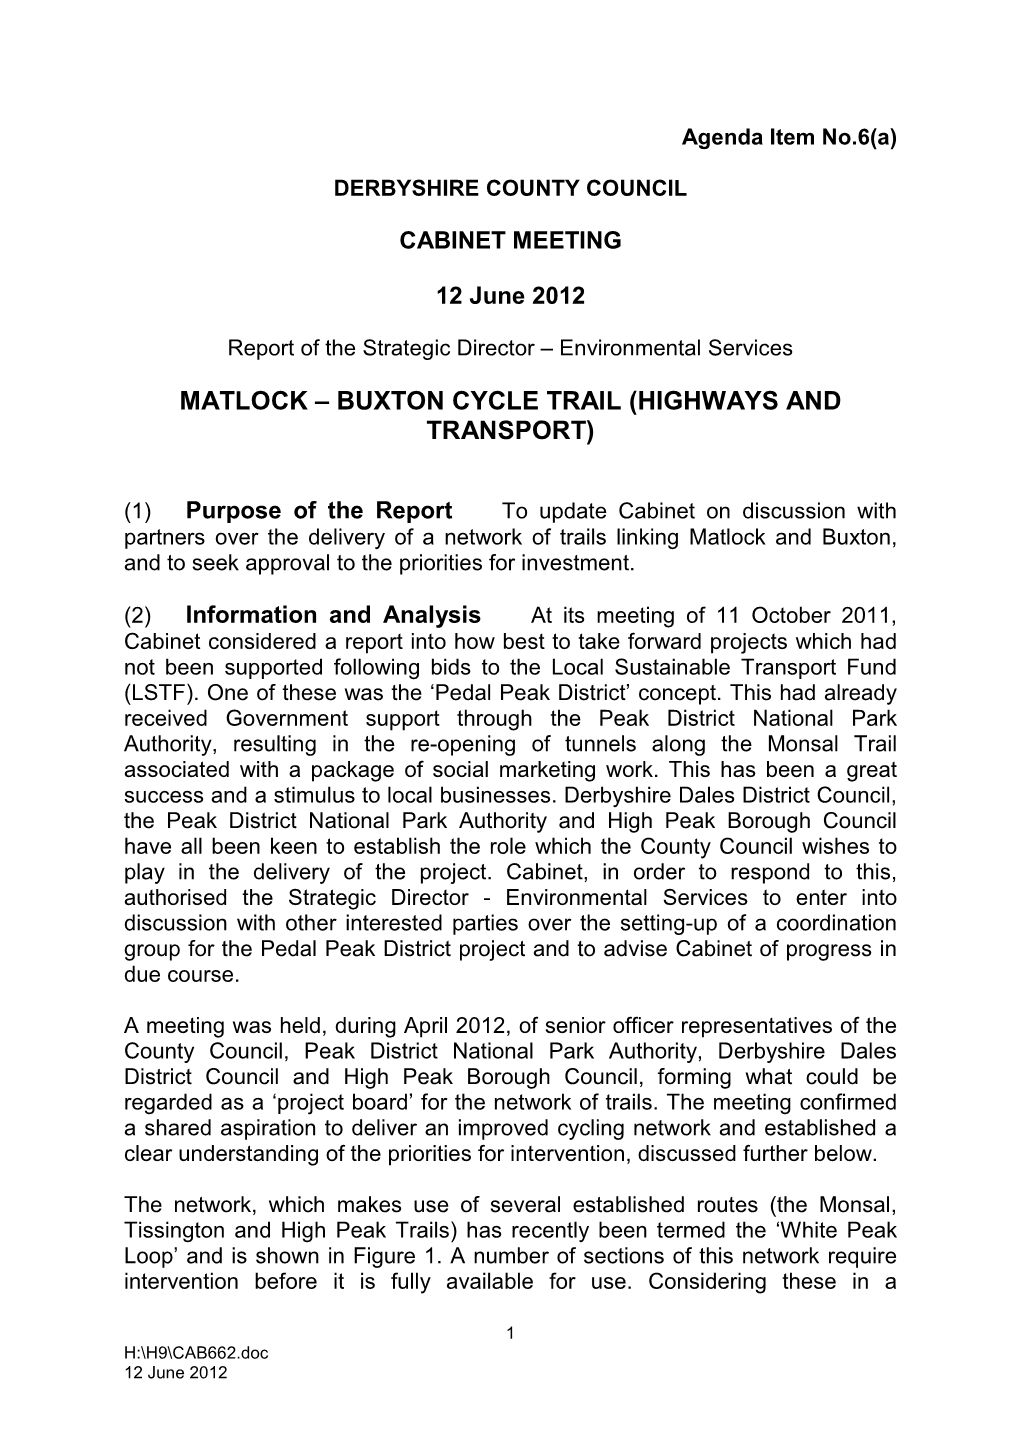 12-6-2012 Matlock Buxton Cycle